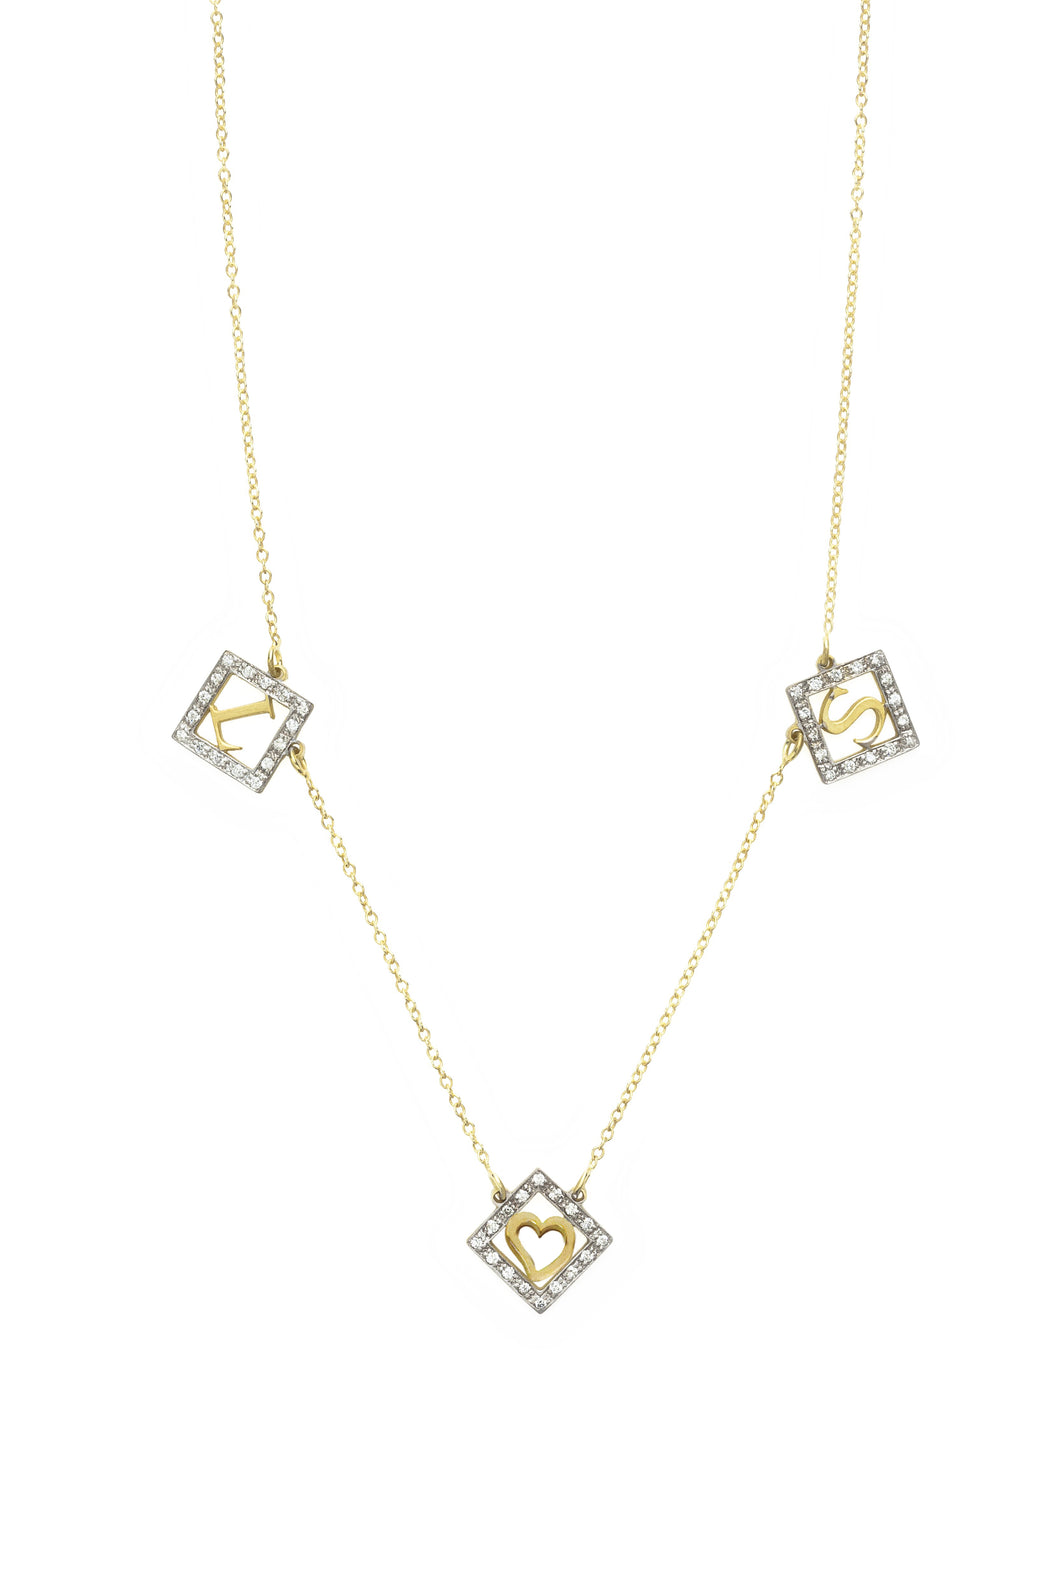 Block Letter Diamond Shape Initials with Heart | Kacey K Jewelry.